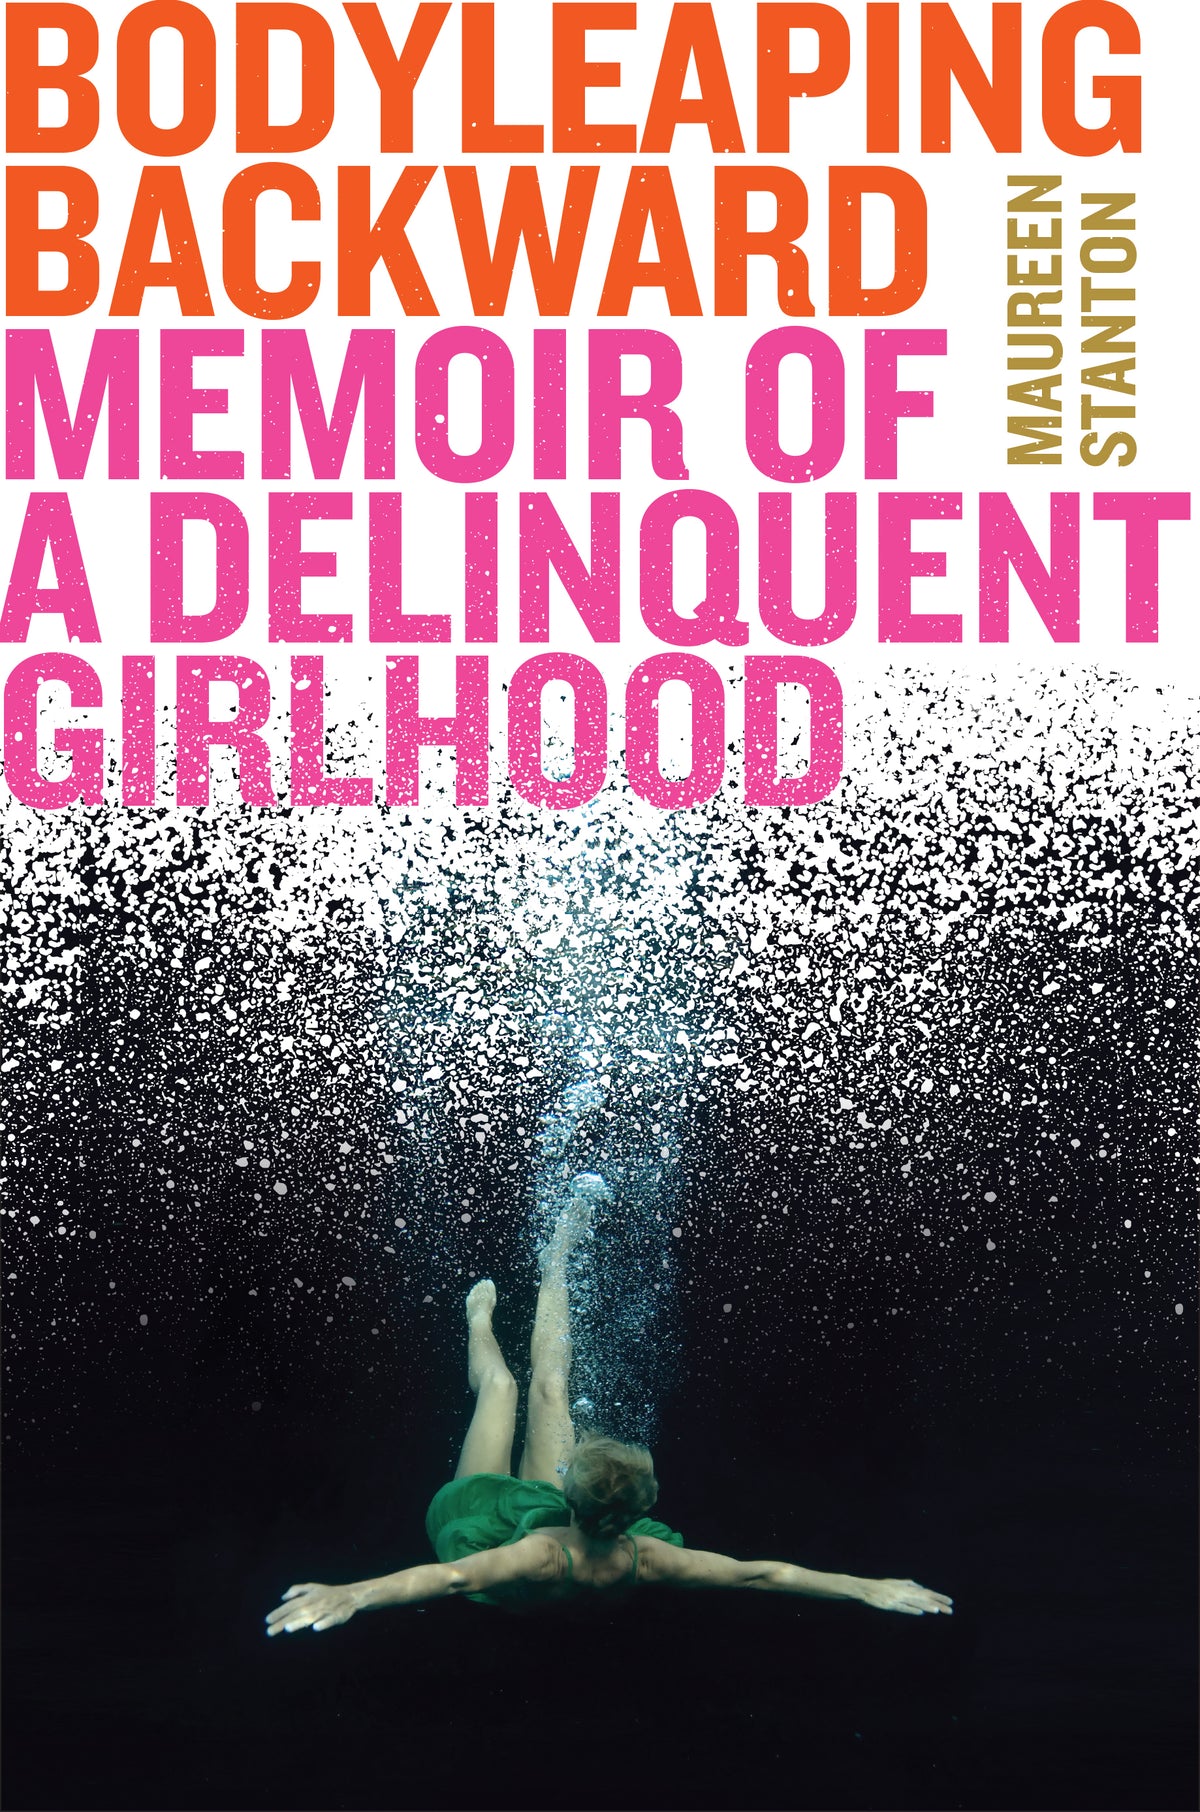 Body Leaping Backward: Memoir of a Delinquent Girlhood;  Maureen Stanton